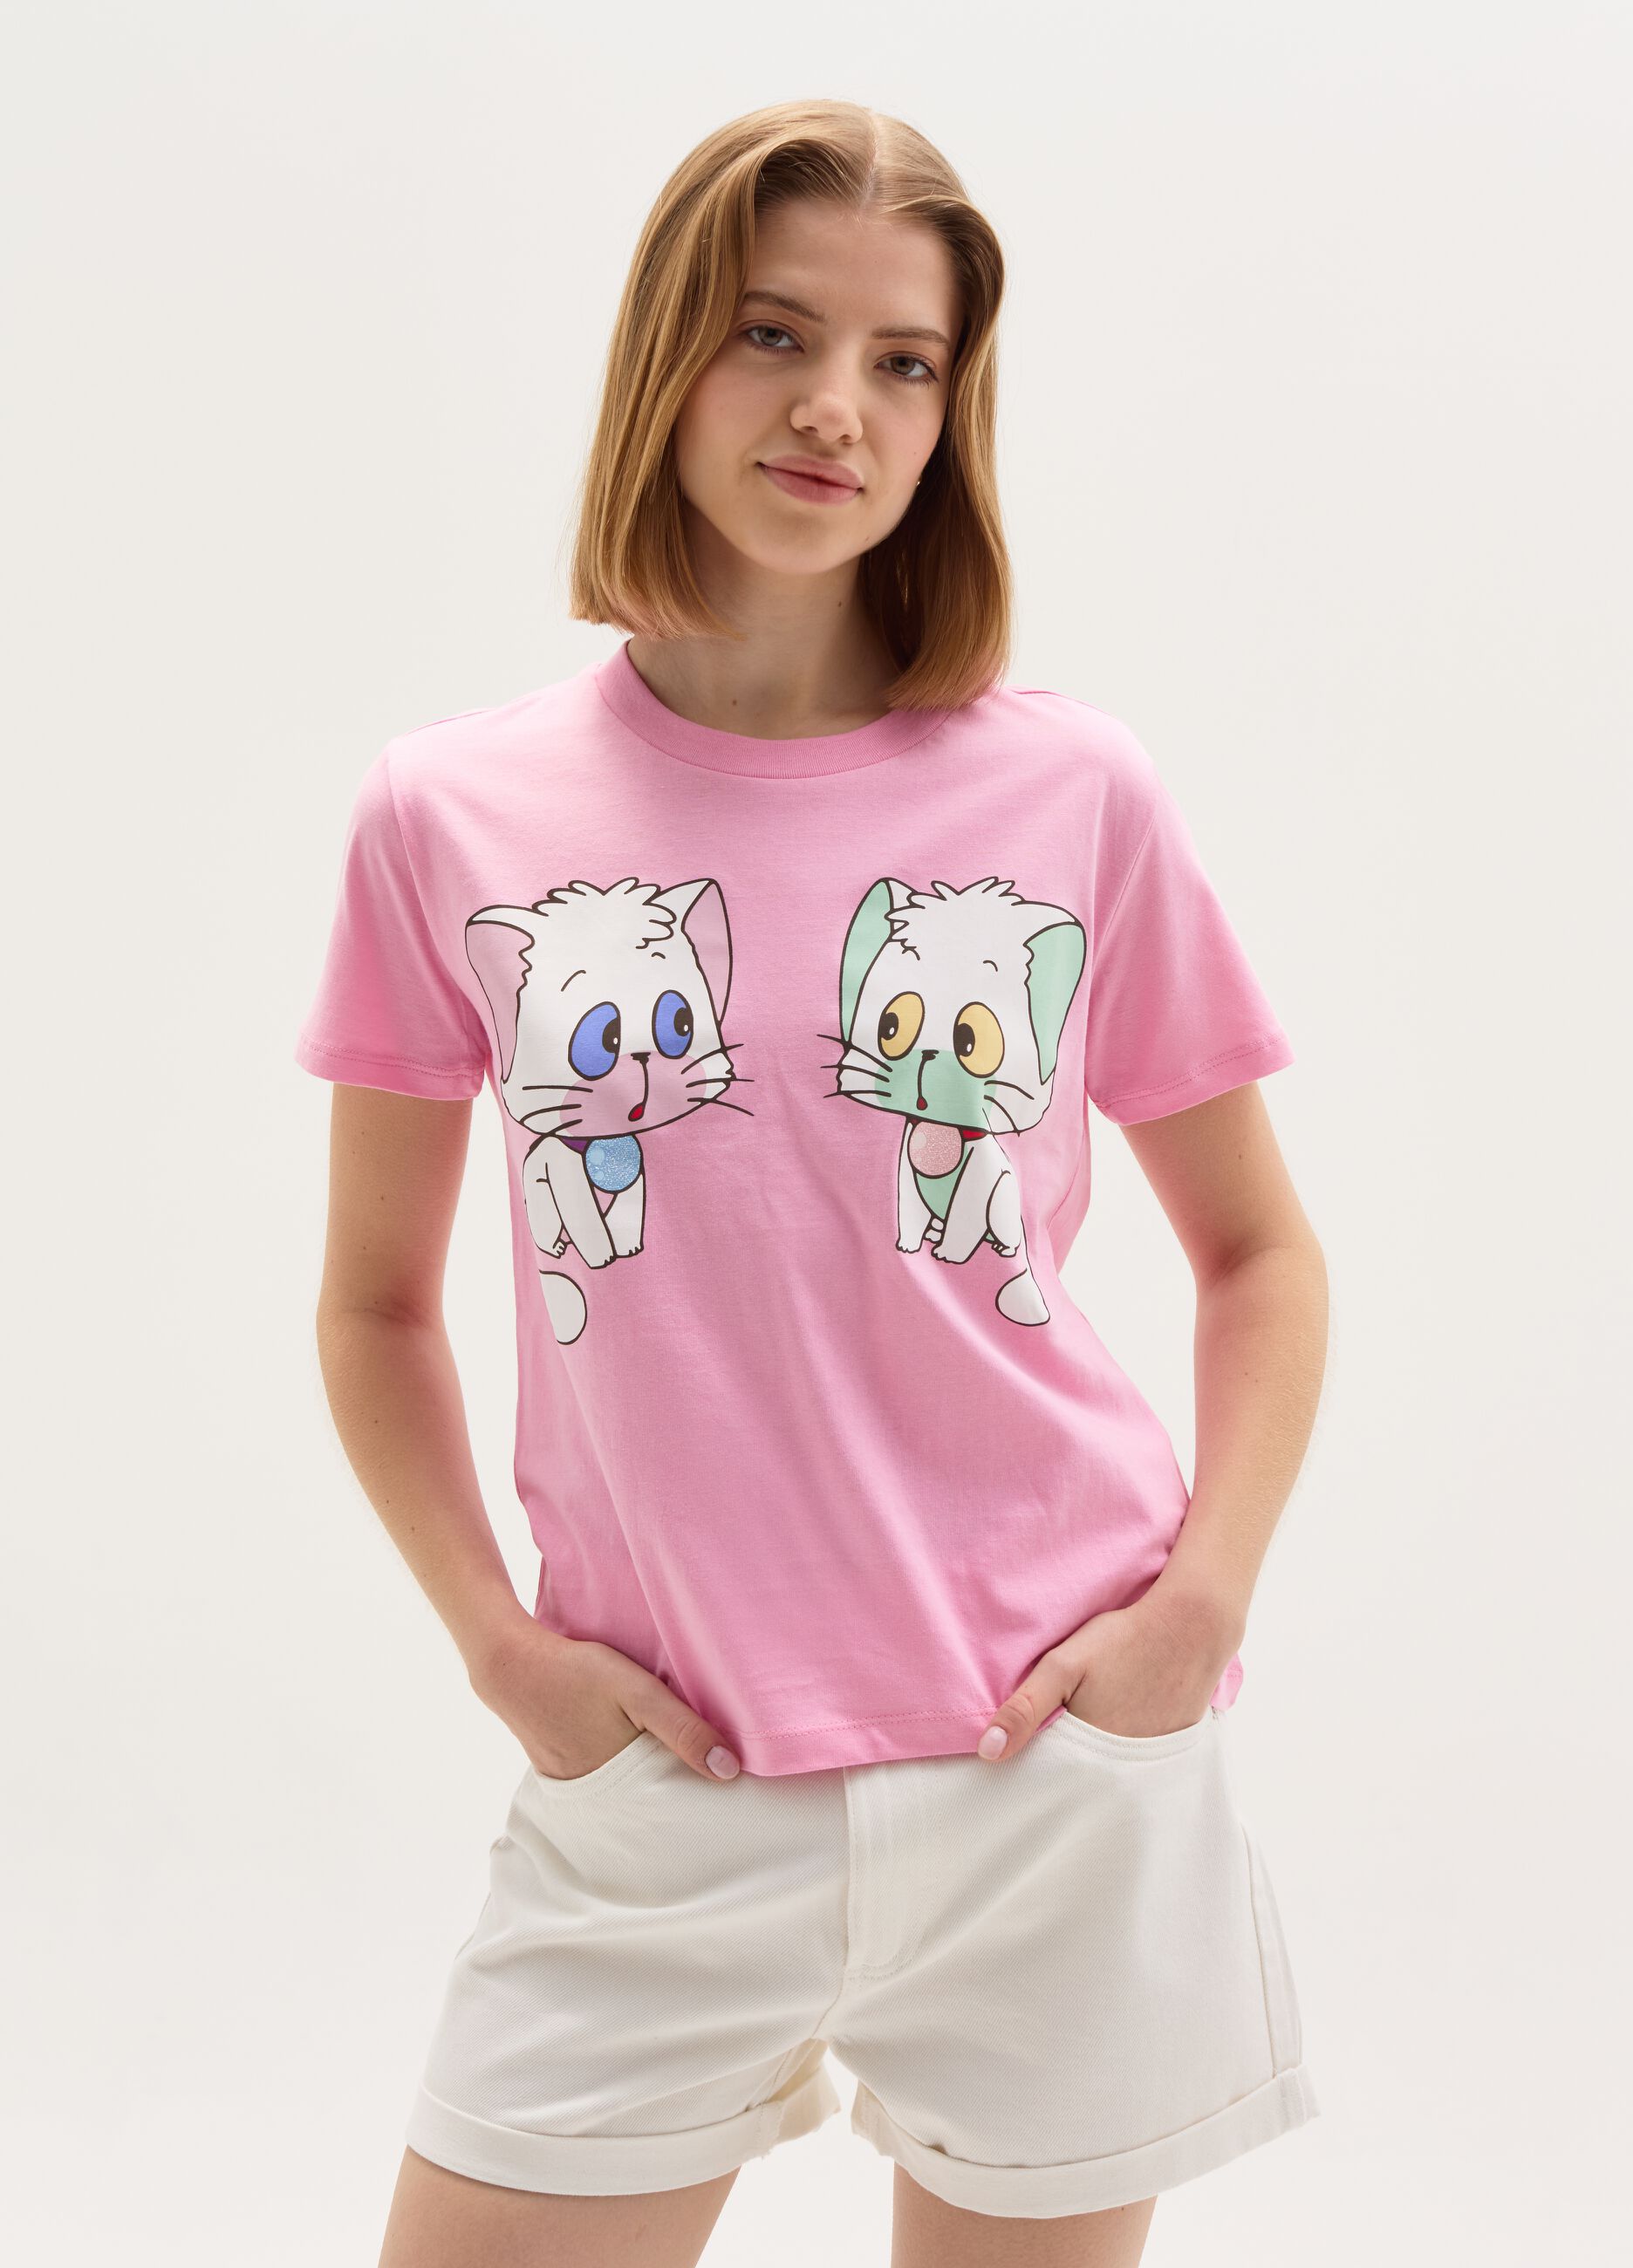 T-shirt with Creamy Mami, the Magic Angel print